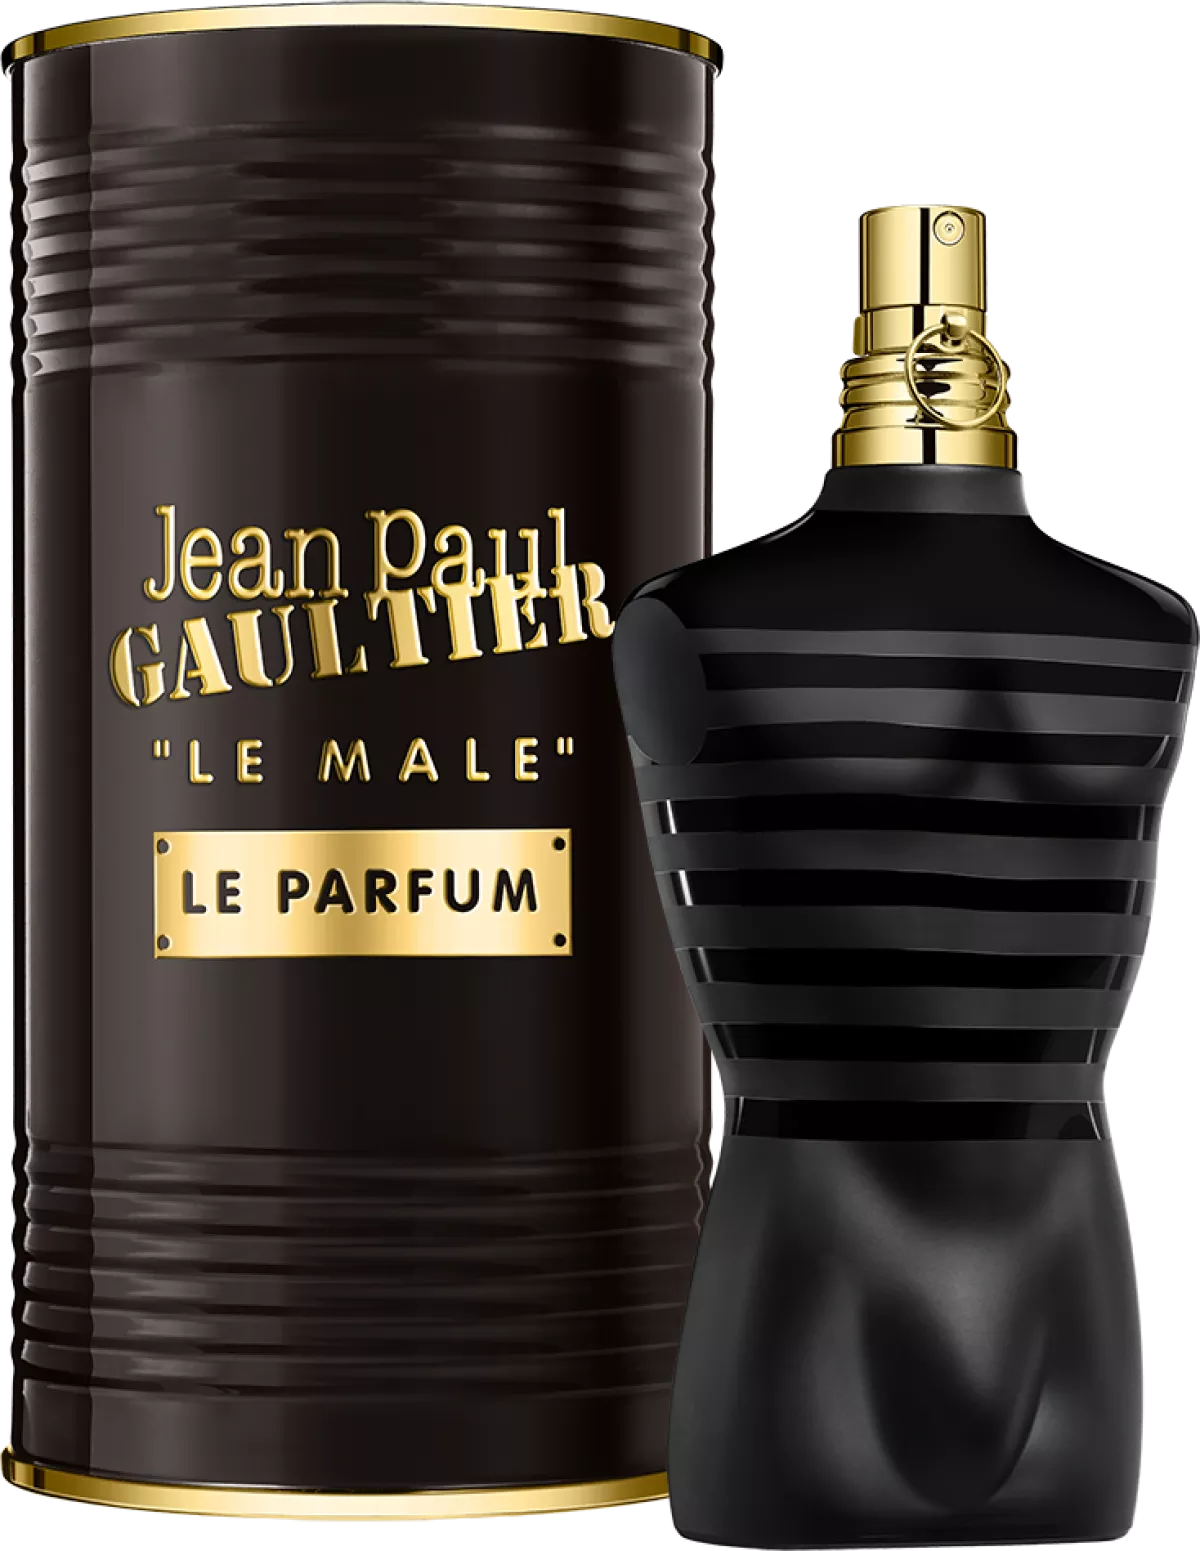 Le Male On Board Jean Paul Gaultier cologne - a fragrance for men 2021